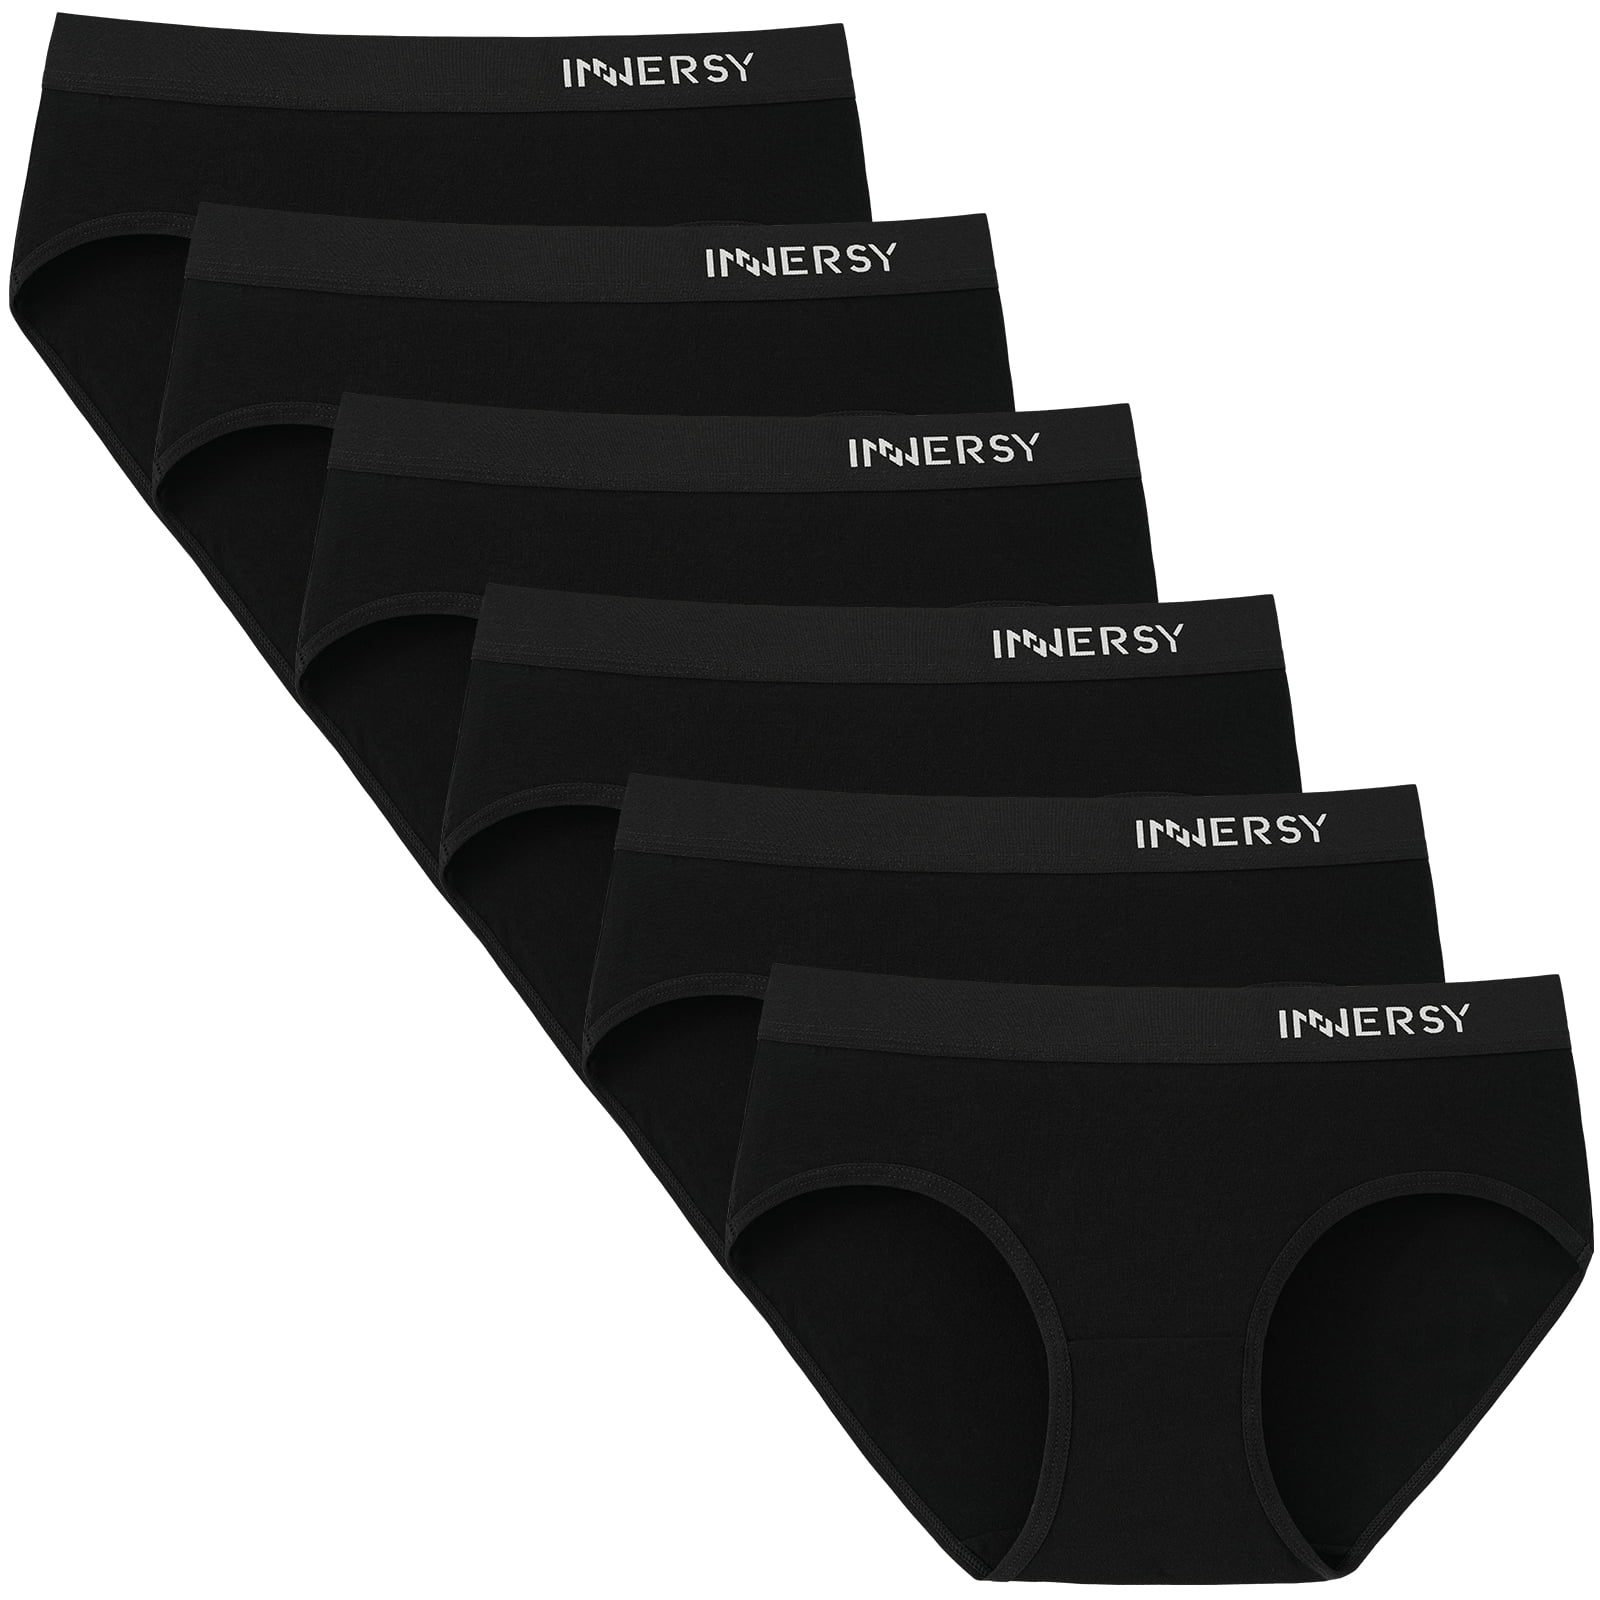 INNERSY Girls Underwear Cotton Briefs Panties for Teens 6-Pack (L(12-14  yrs), Black)